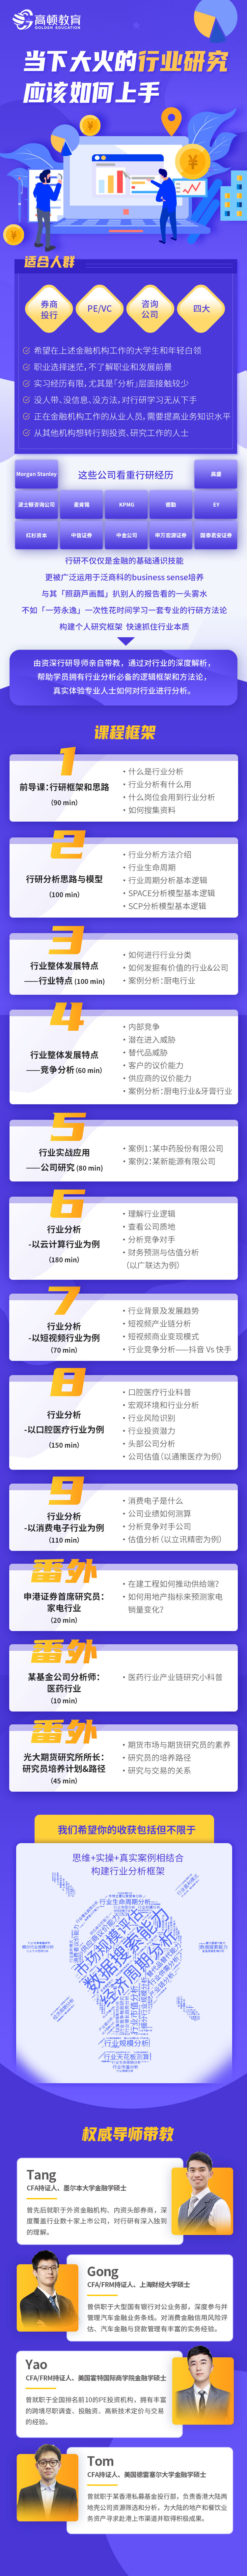 https://simg01.gaodunwangxiao.com/uploadfiles/product-center/202208/10/ace31_20220810132506.jpg